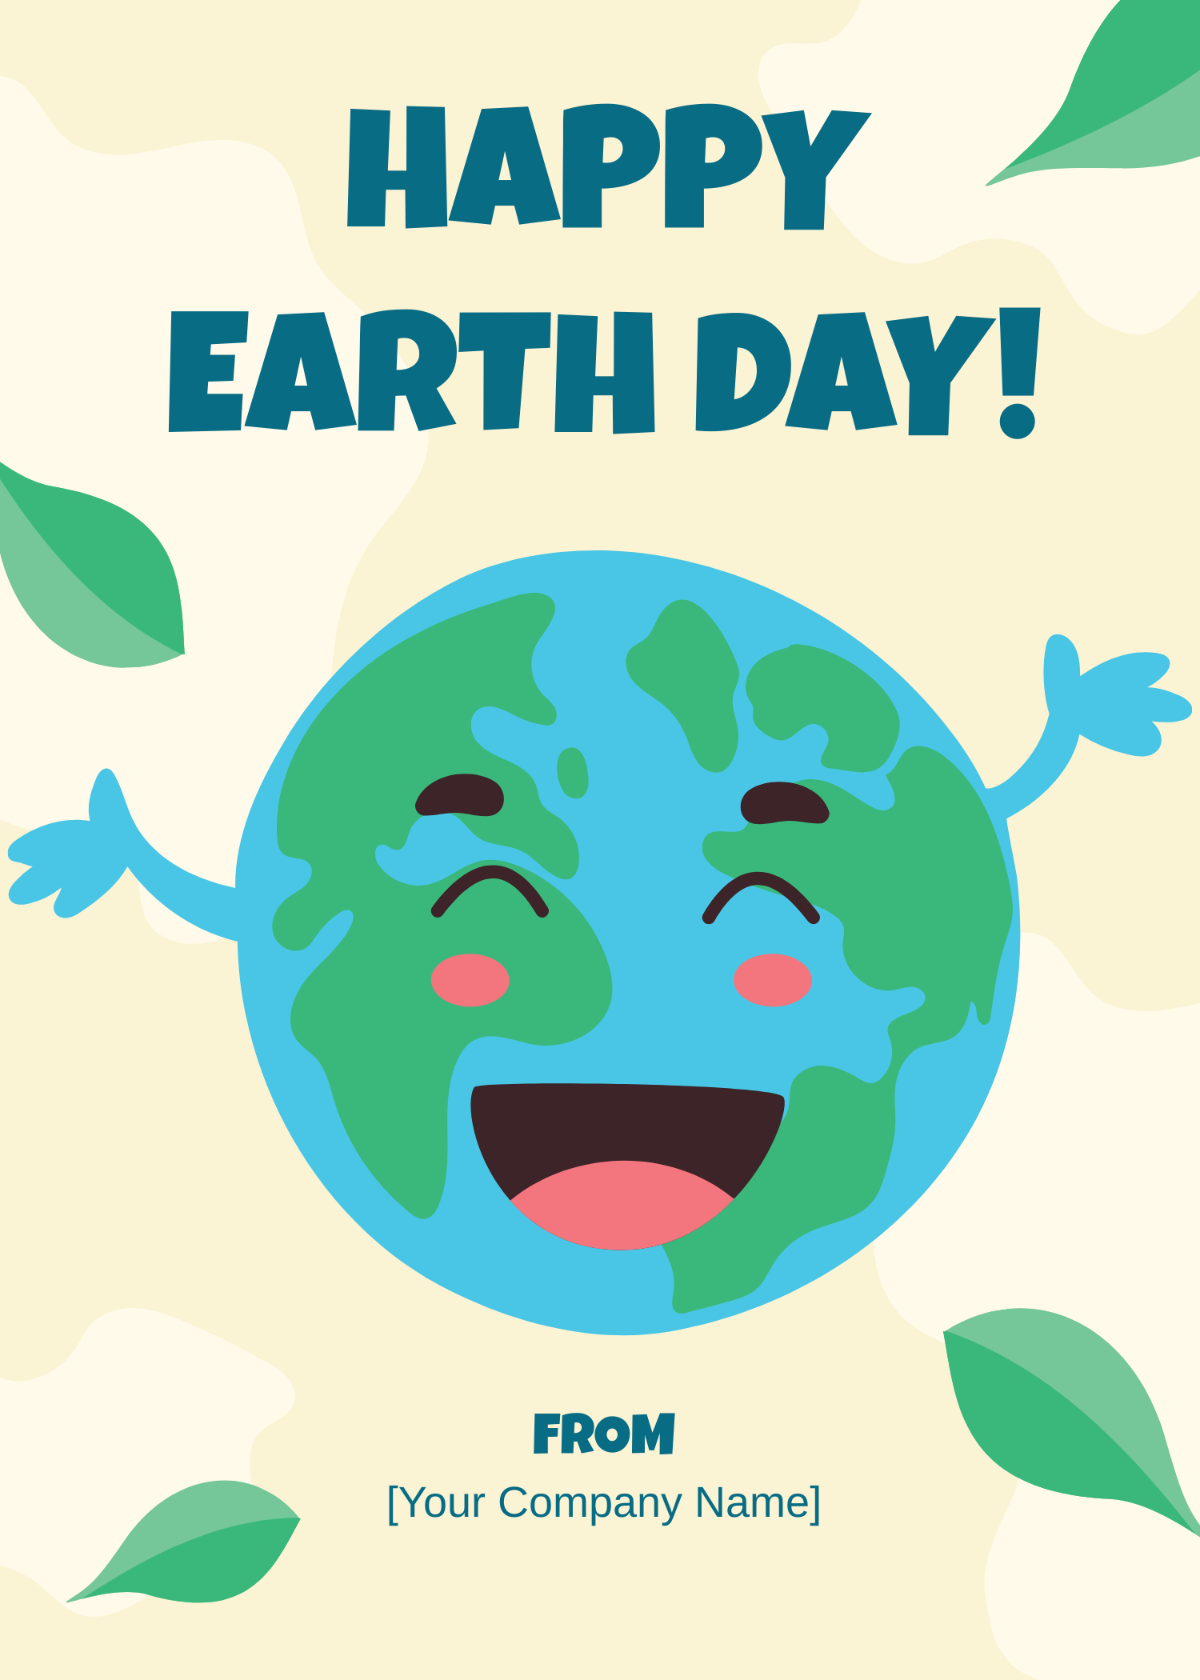 Earth Day Greetings